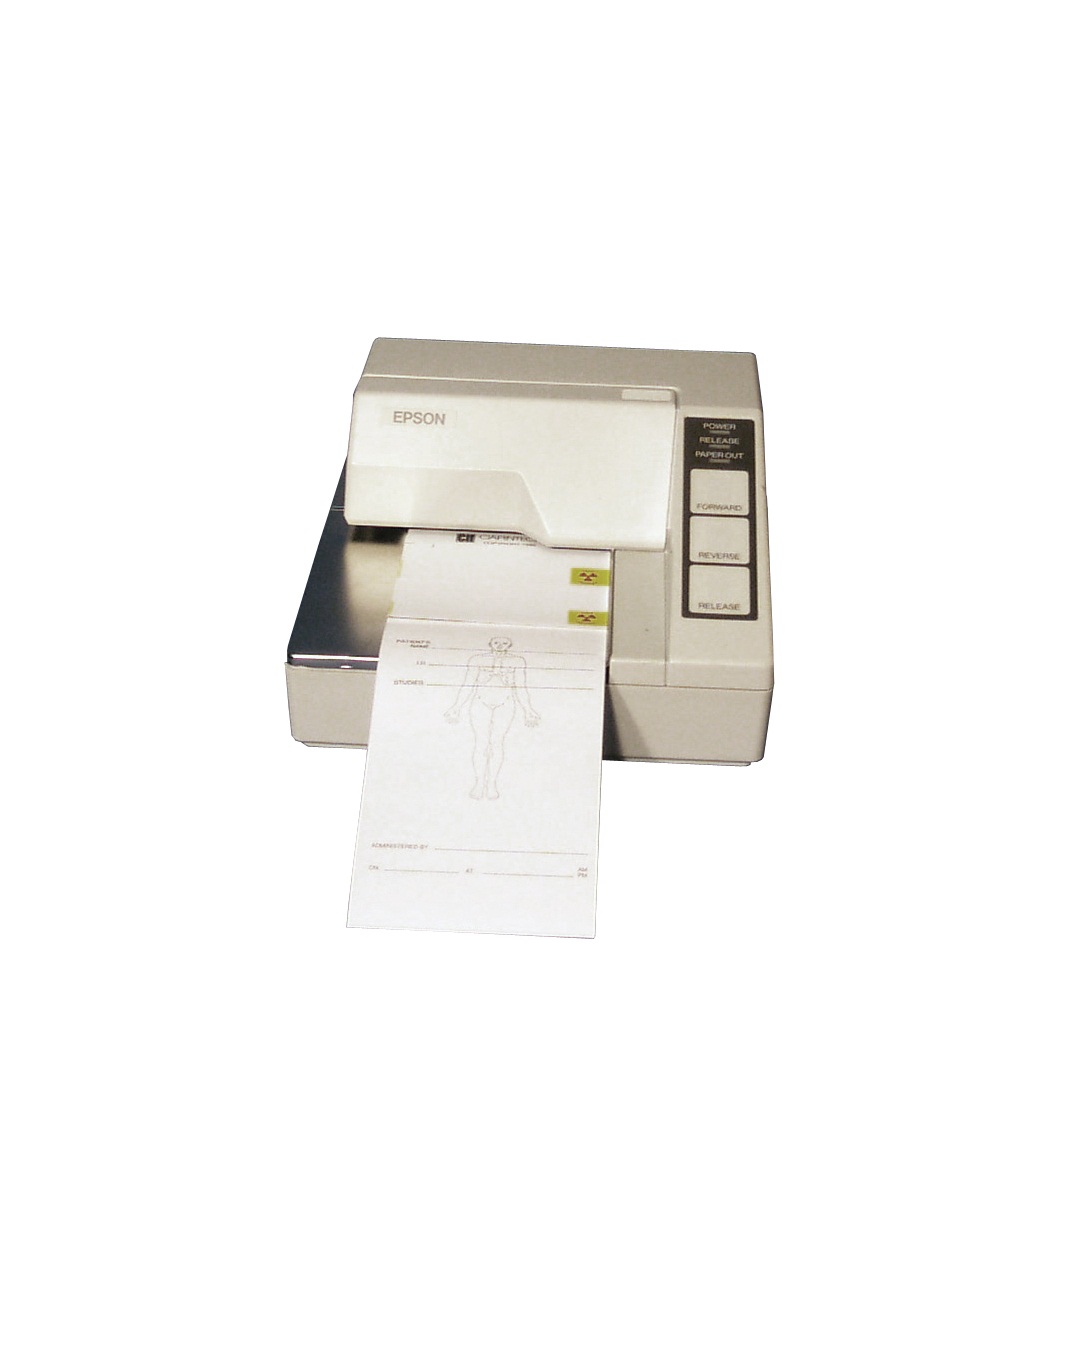 Epson Ticket Printer for CRC